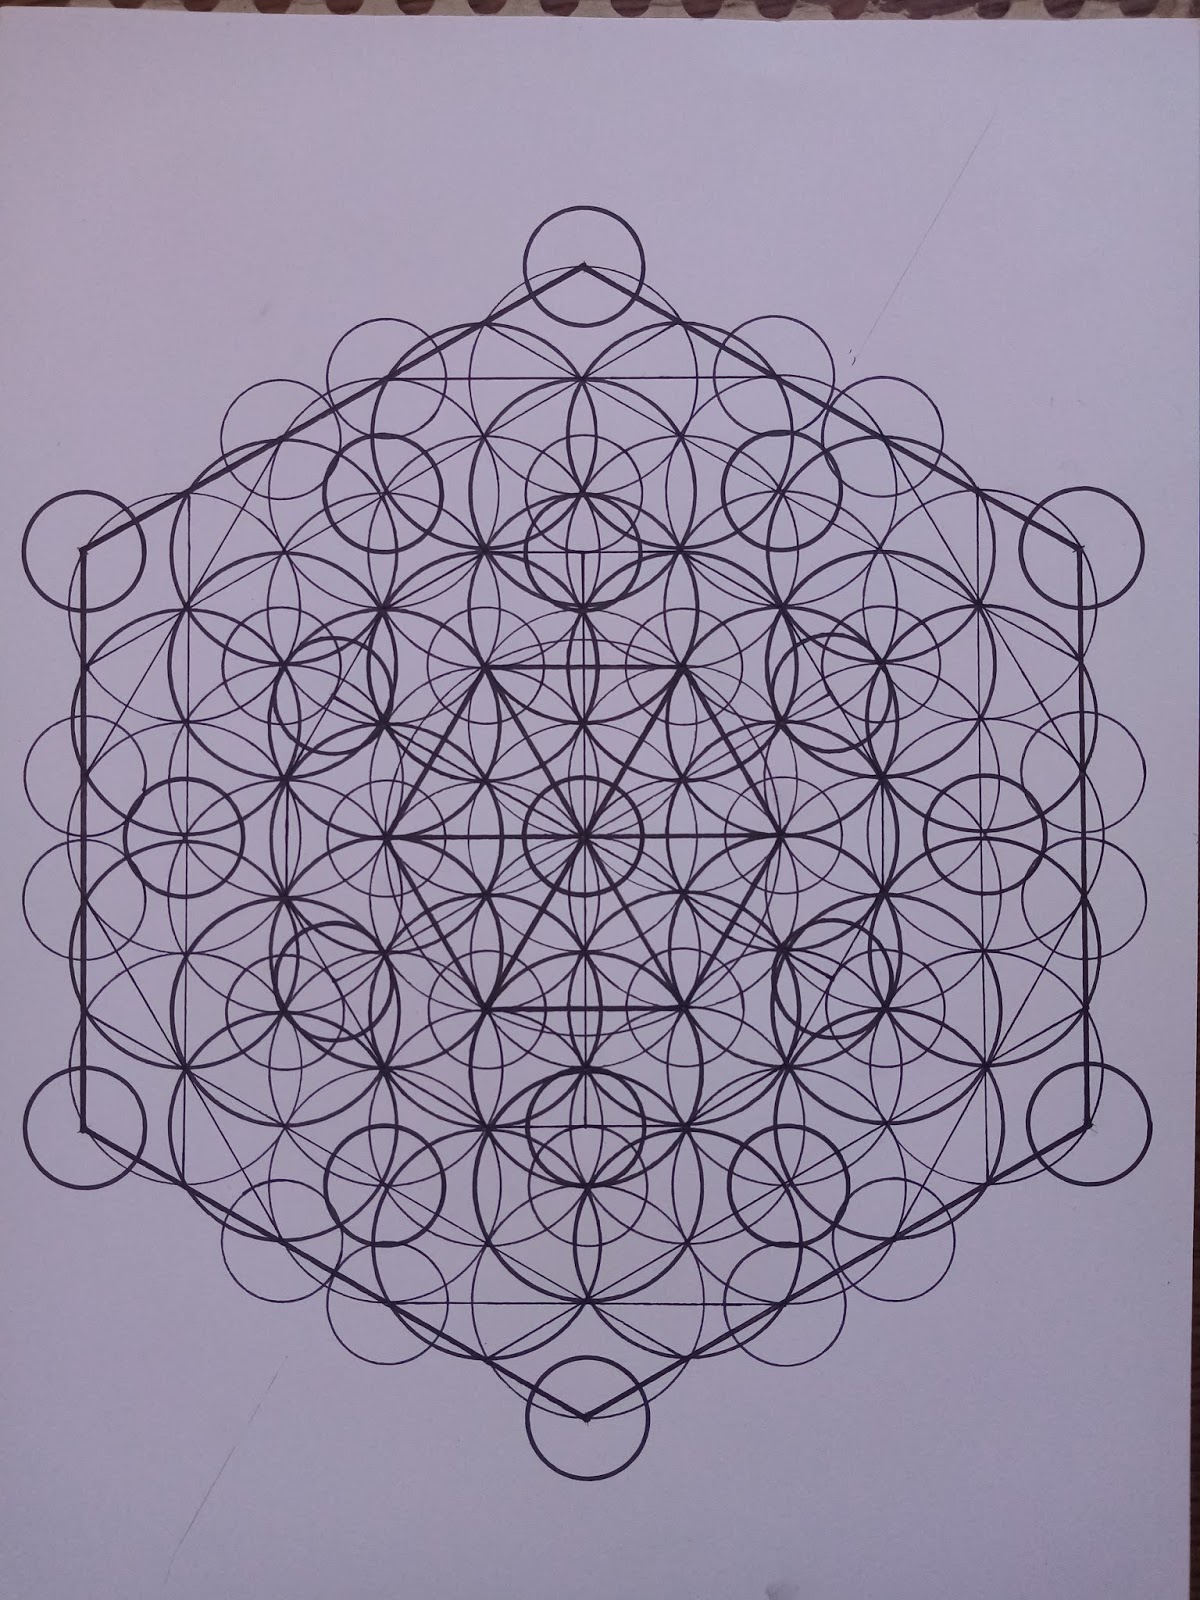 [SPOLYK] - Geometries & sketches - Page 6 IMG_20200328_102557